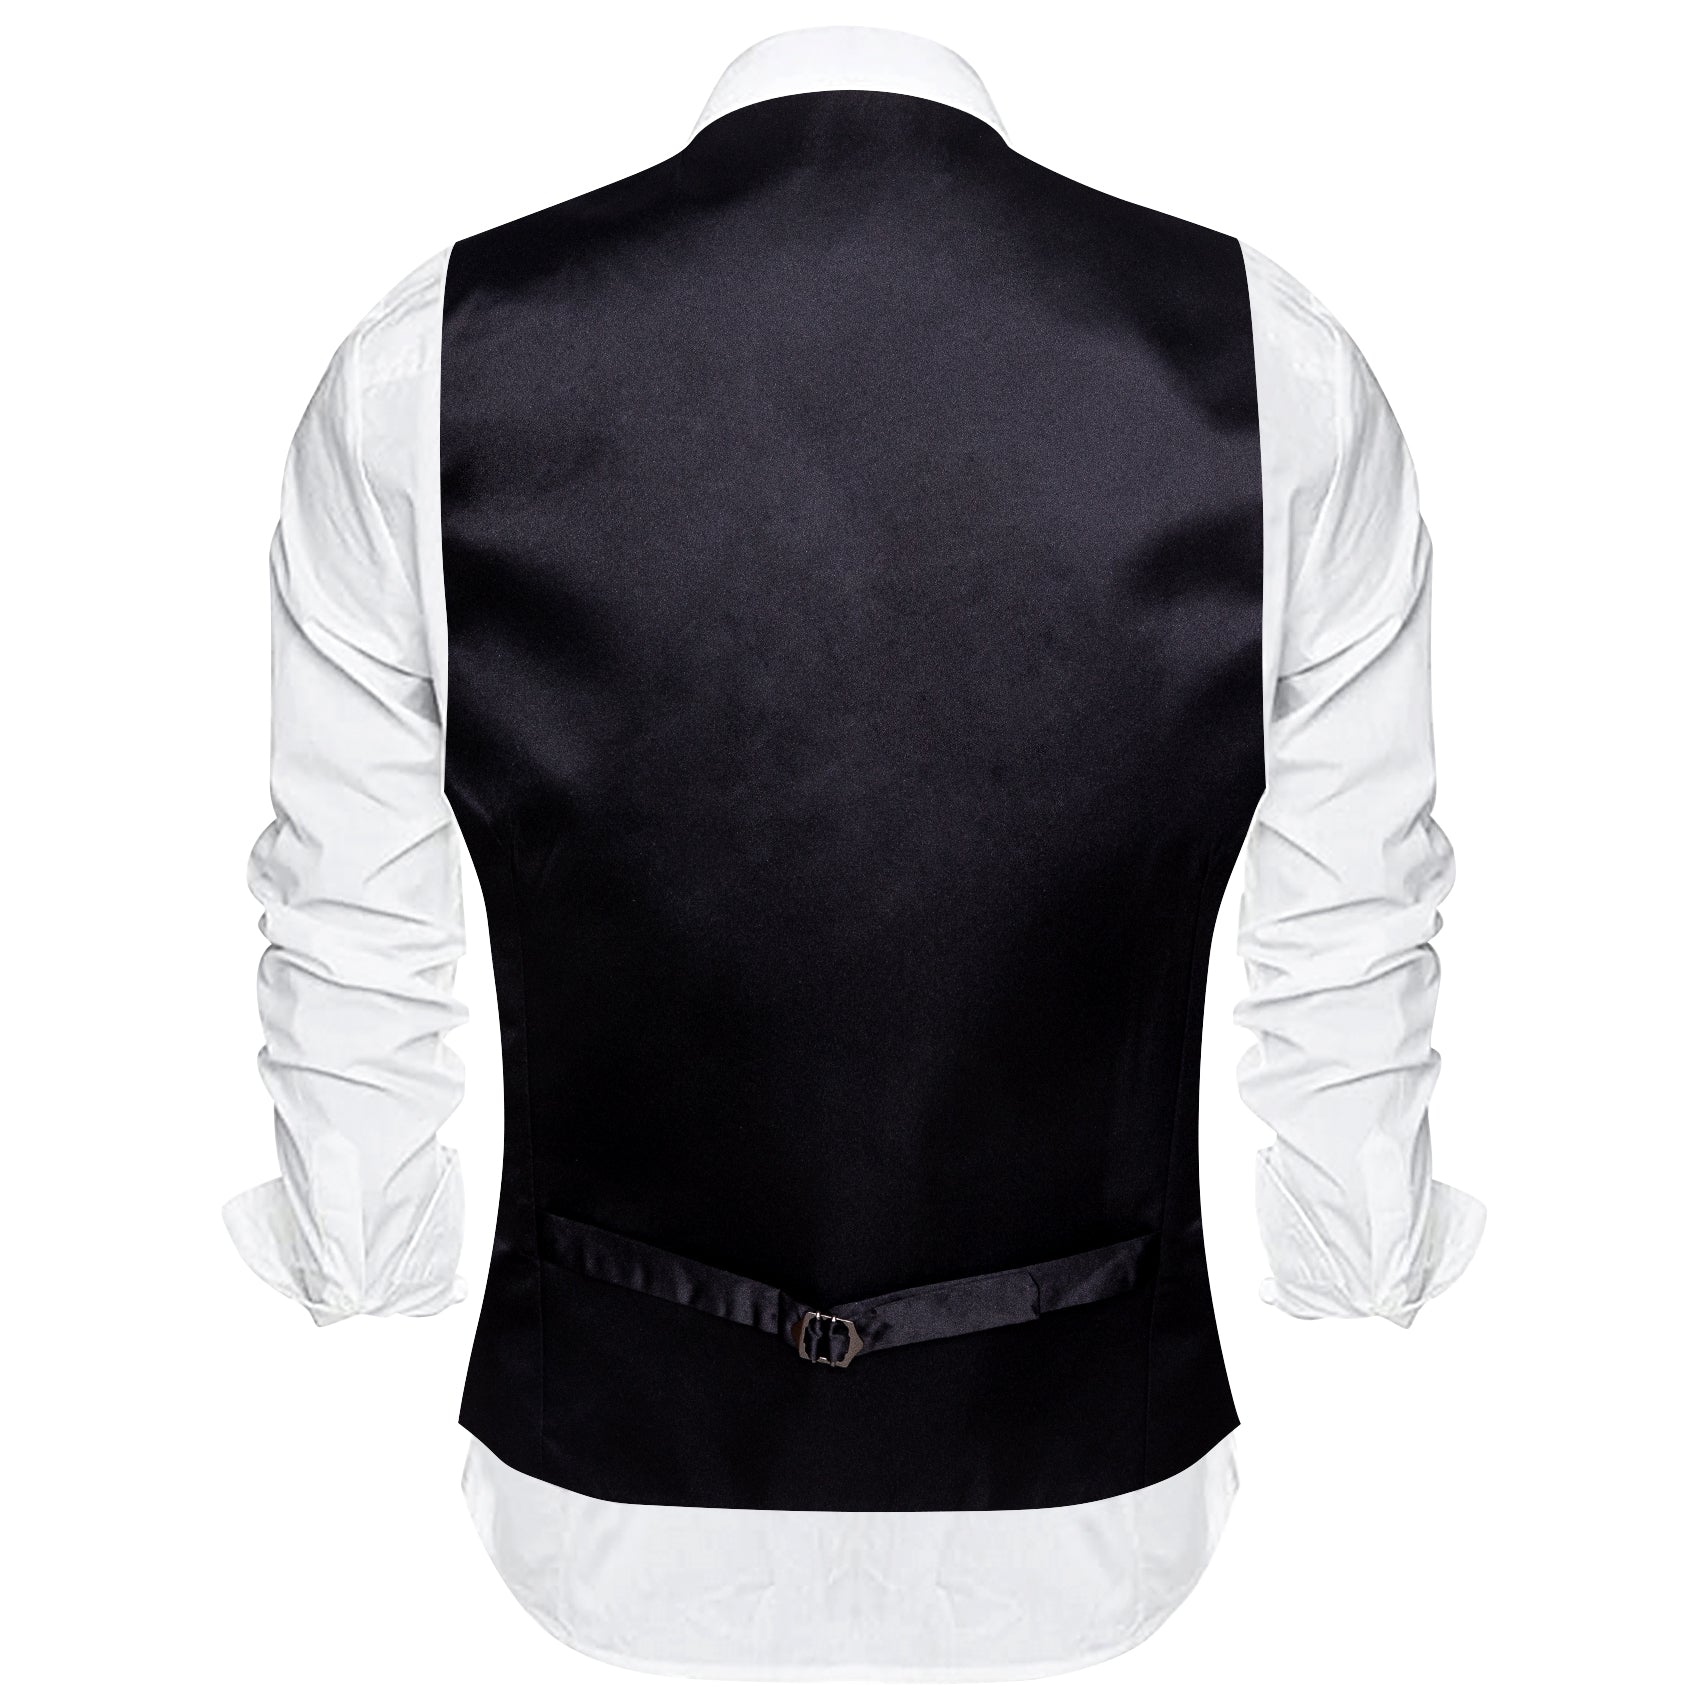 Barry.wang Men's Work Vest Grey Solid Business Vest Set Waistcoat Suit Set